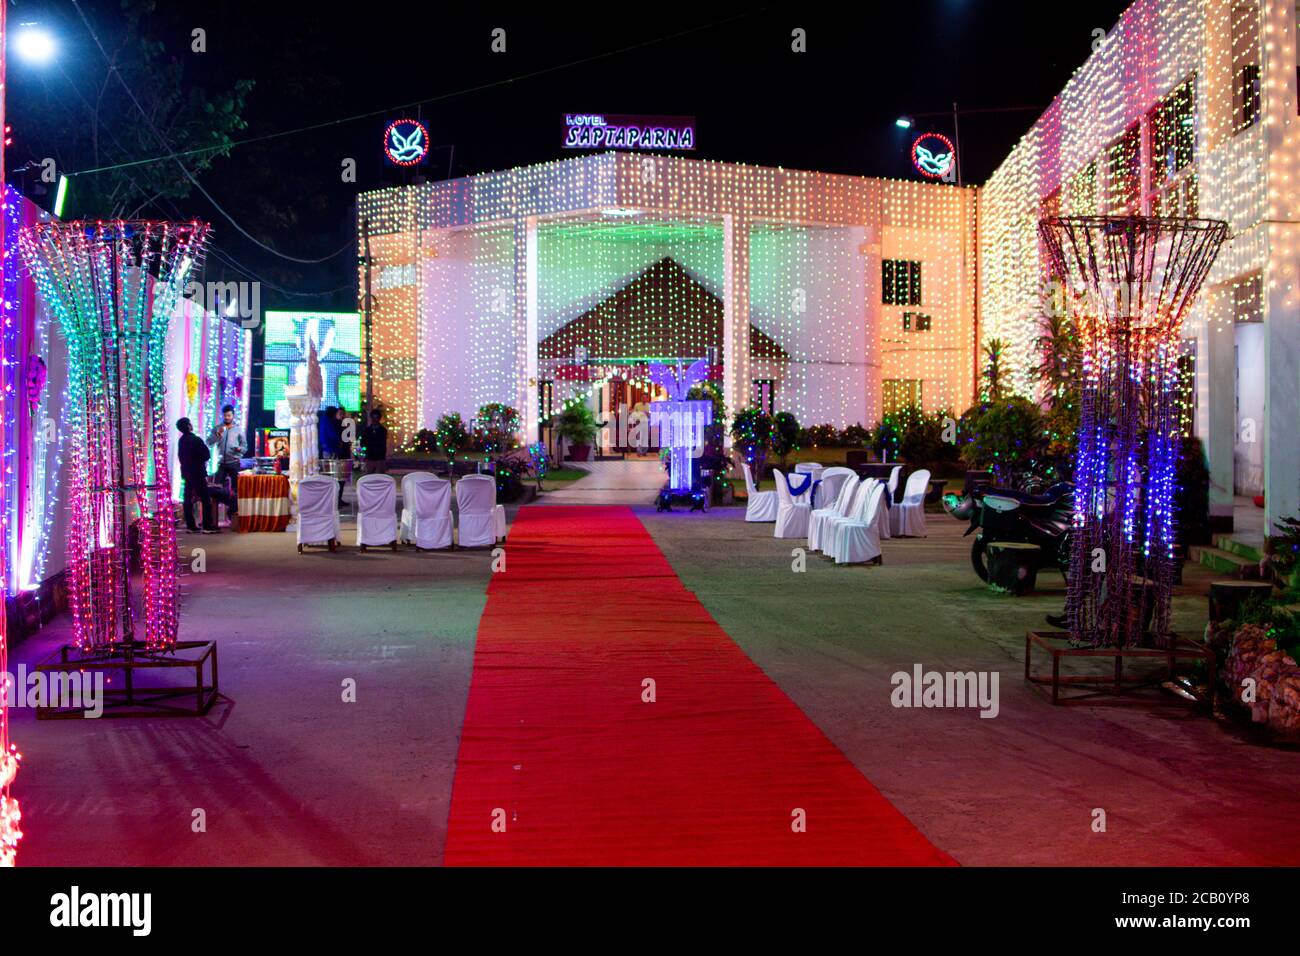 Saptaparna hotel in Bankura, west Bengal decorated for indian wedding ceremony Stock Photo